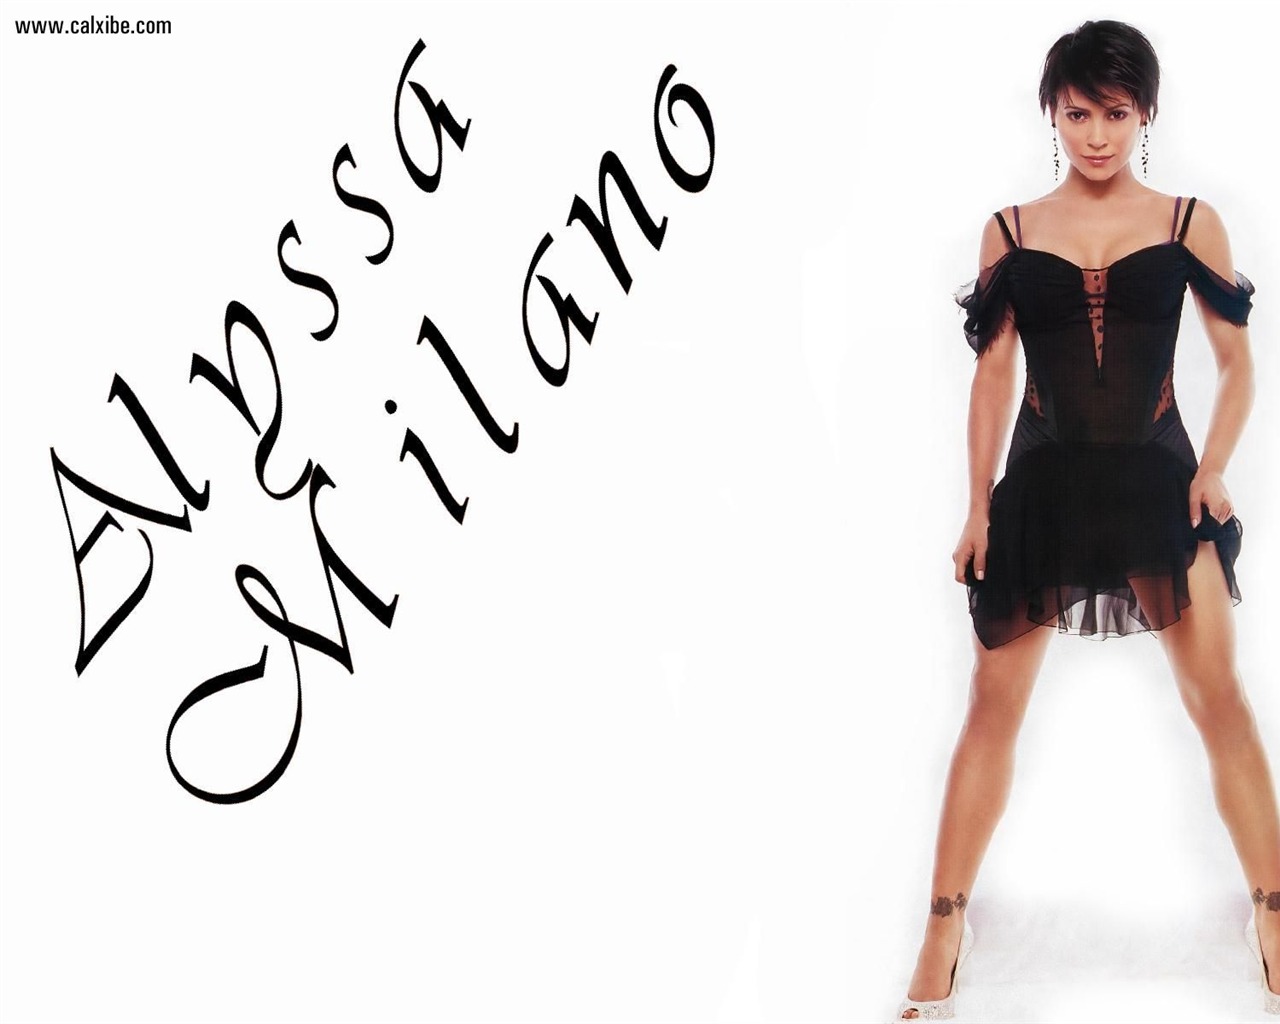 Alyssa Milano 艾莉莎·米蘭諾 美女壁紙(二) #25 - 1280x1024